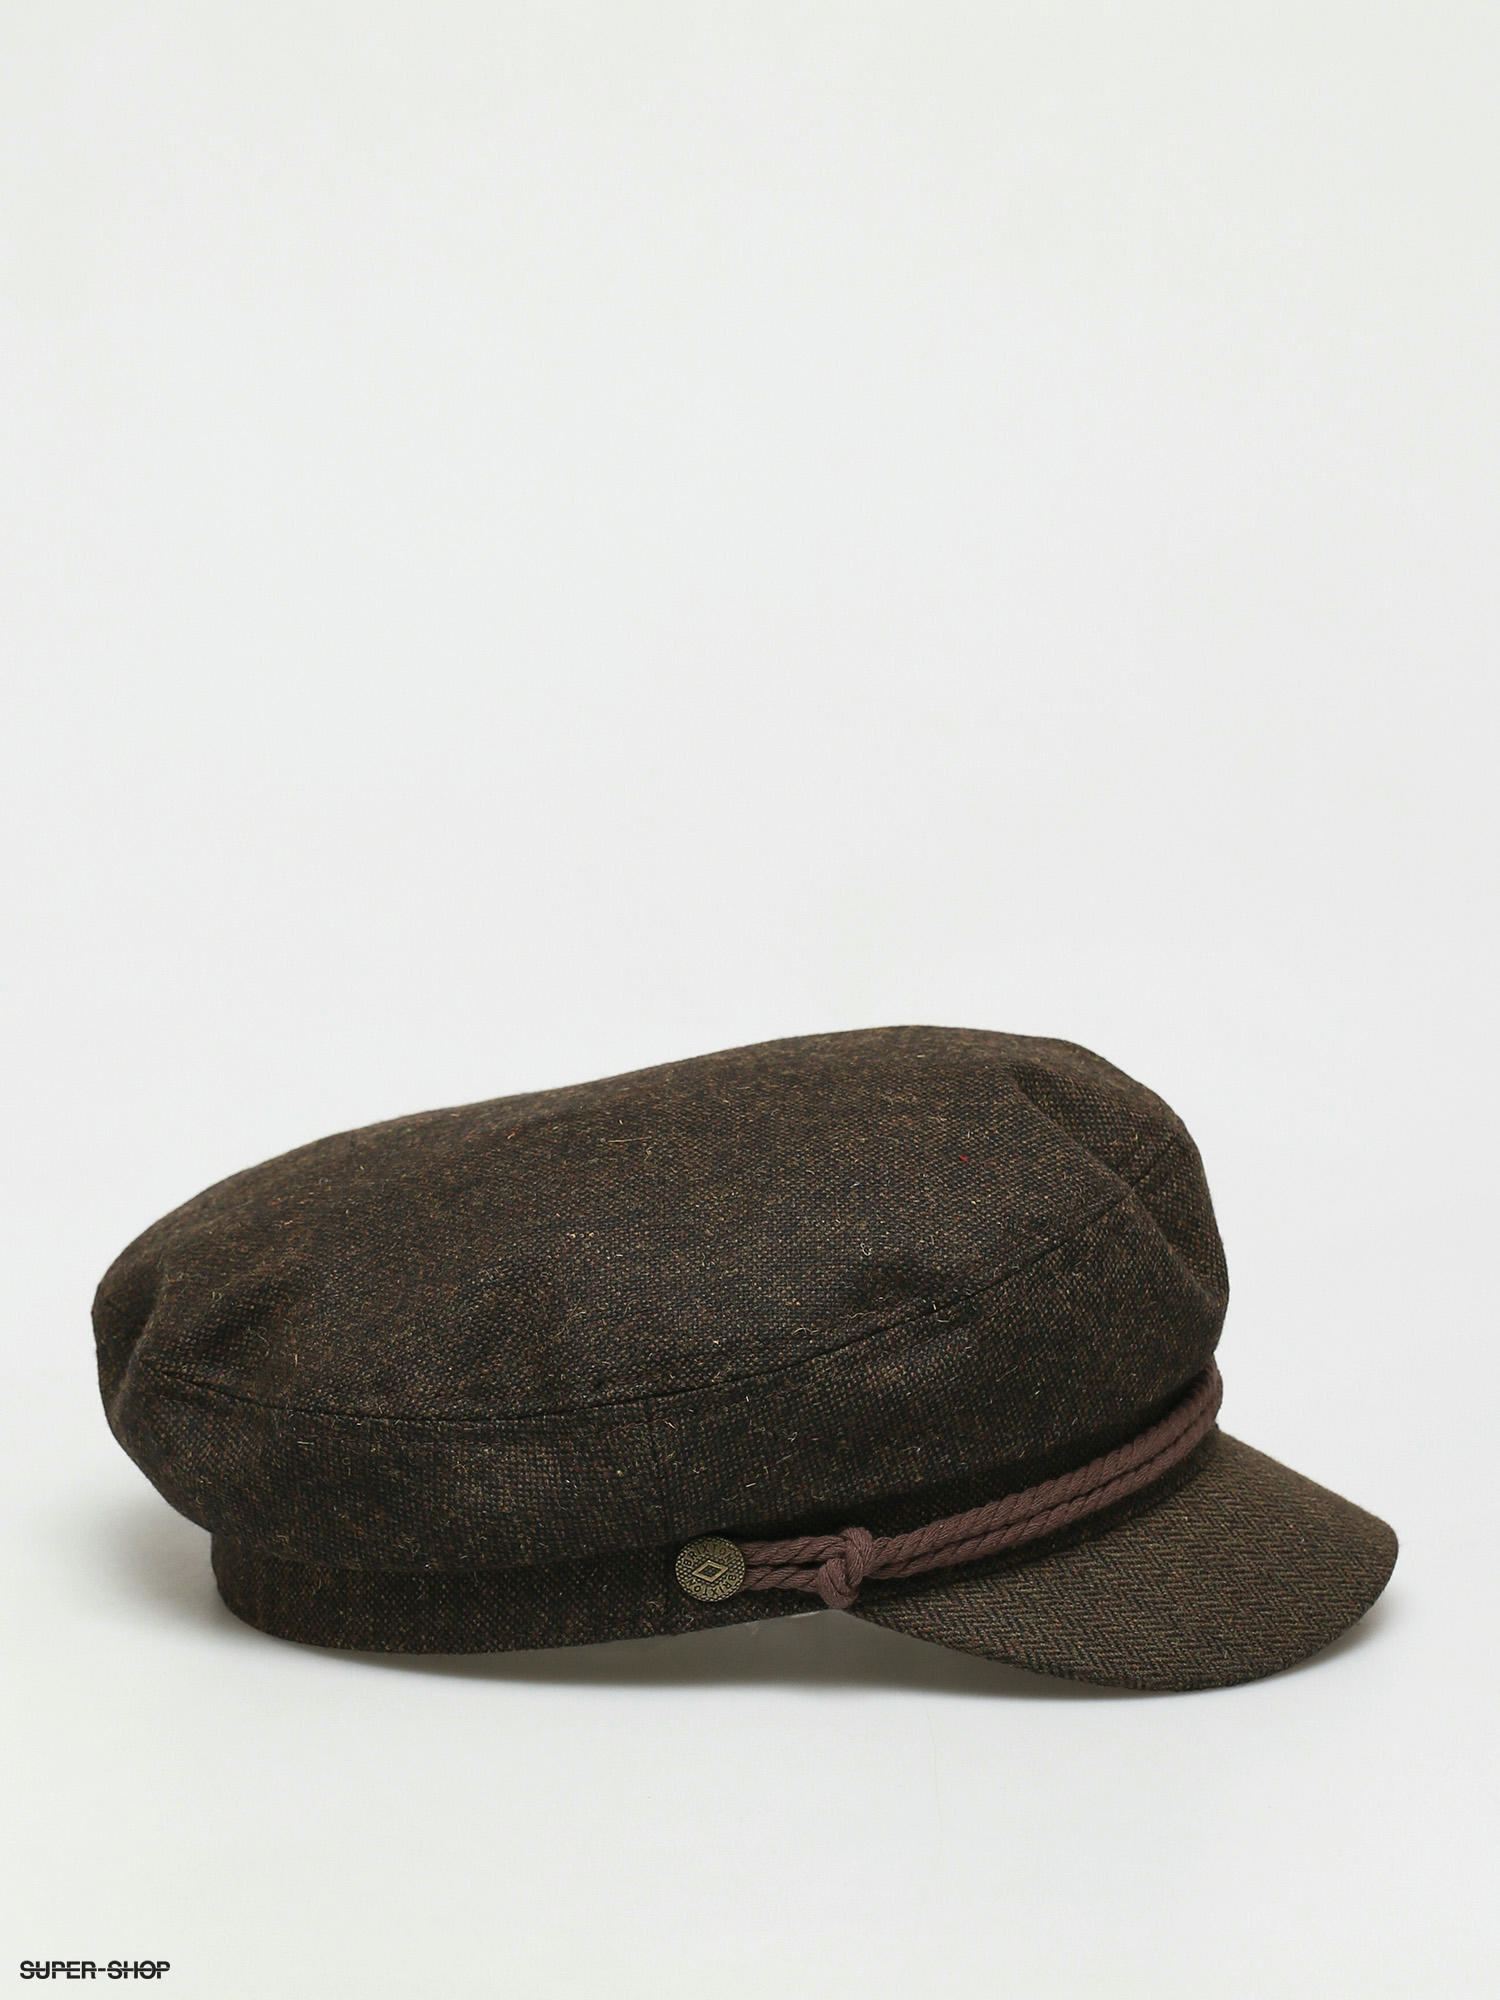 Brixton Fiddler Cap Flat cap (bison/brown)